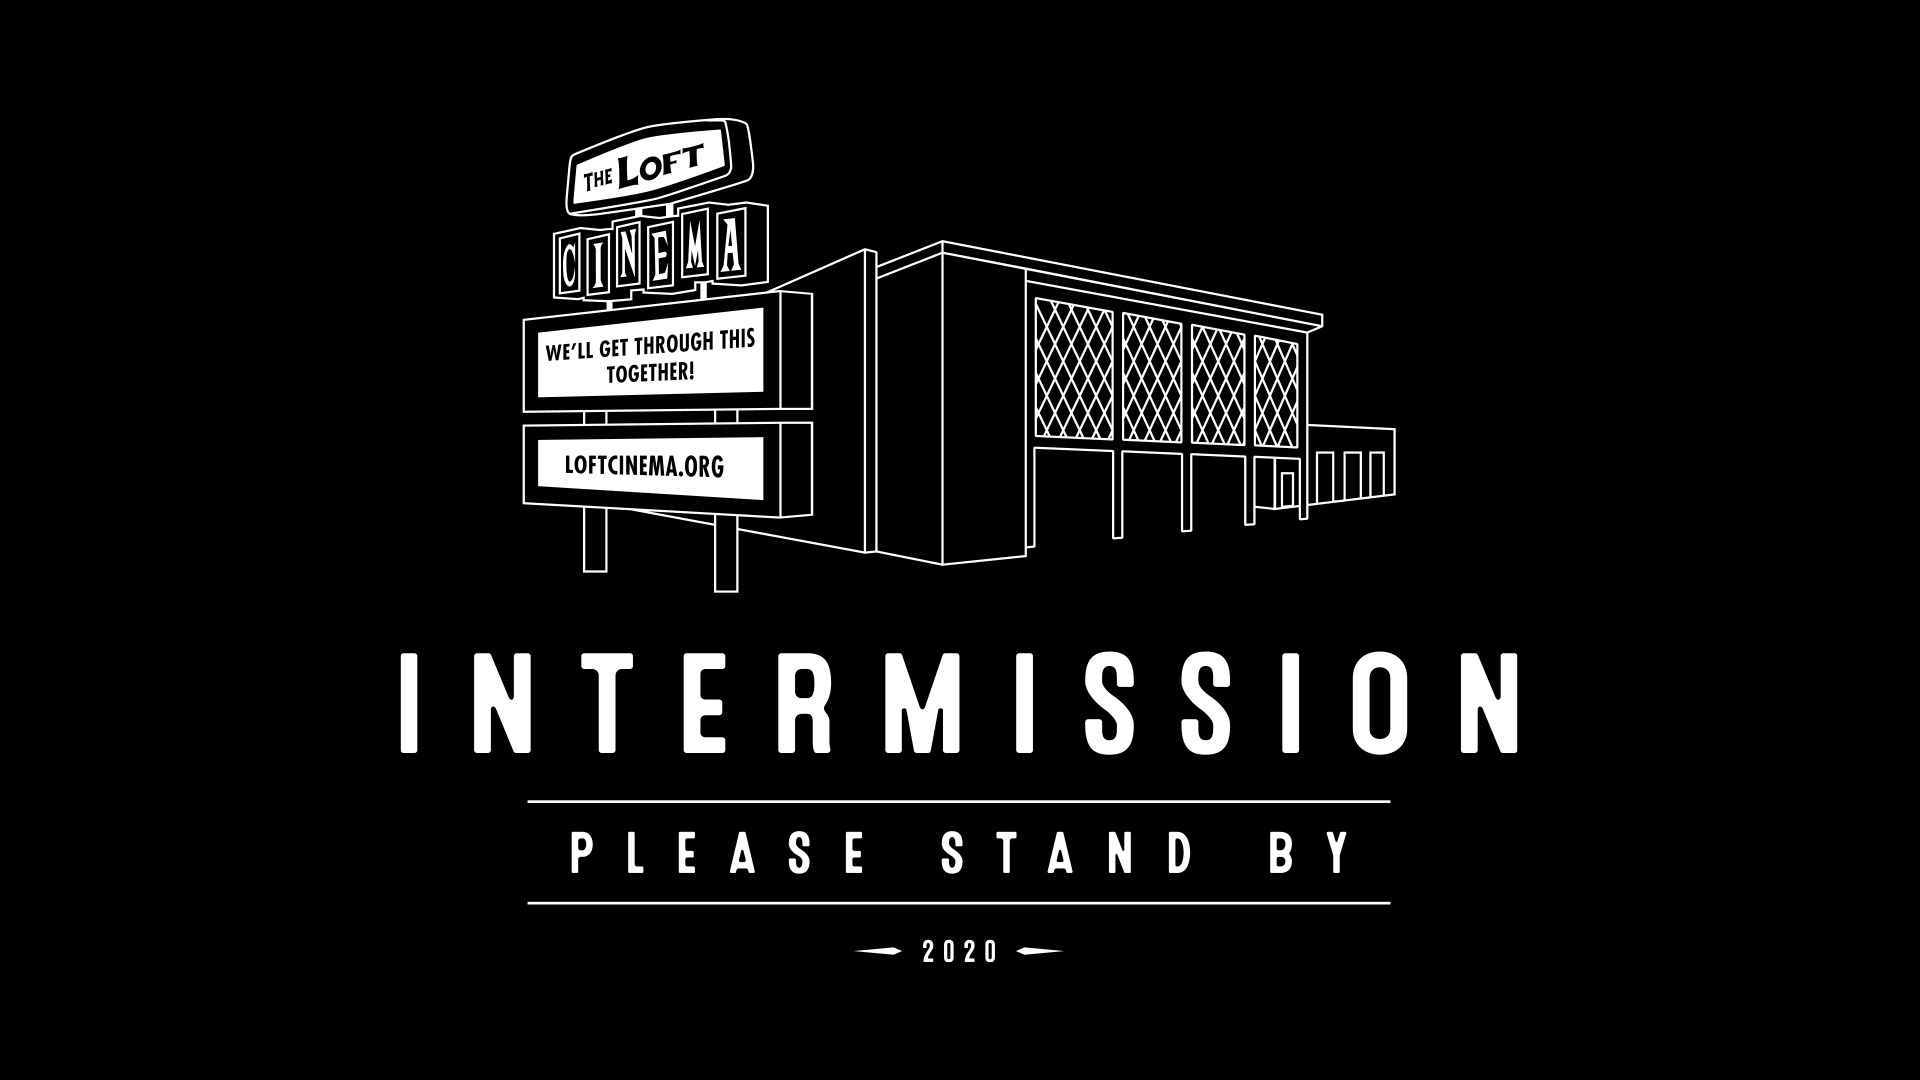 featured image:The Loft Cinema Intermission